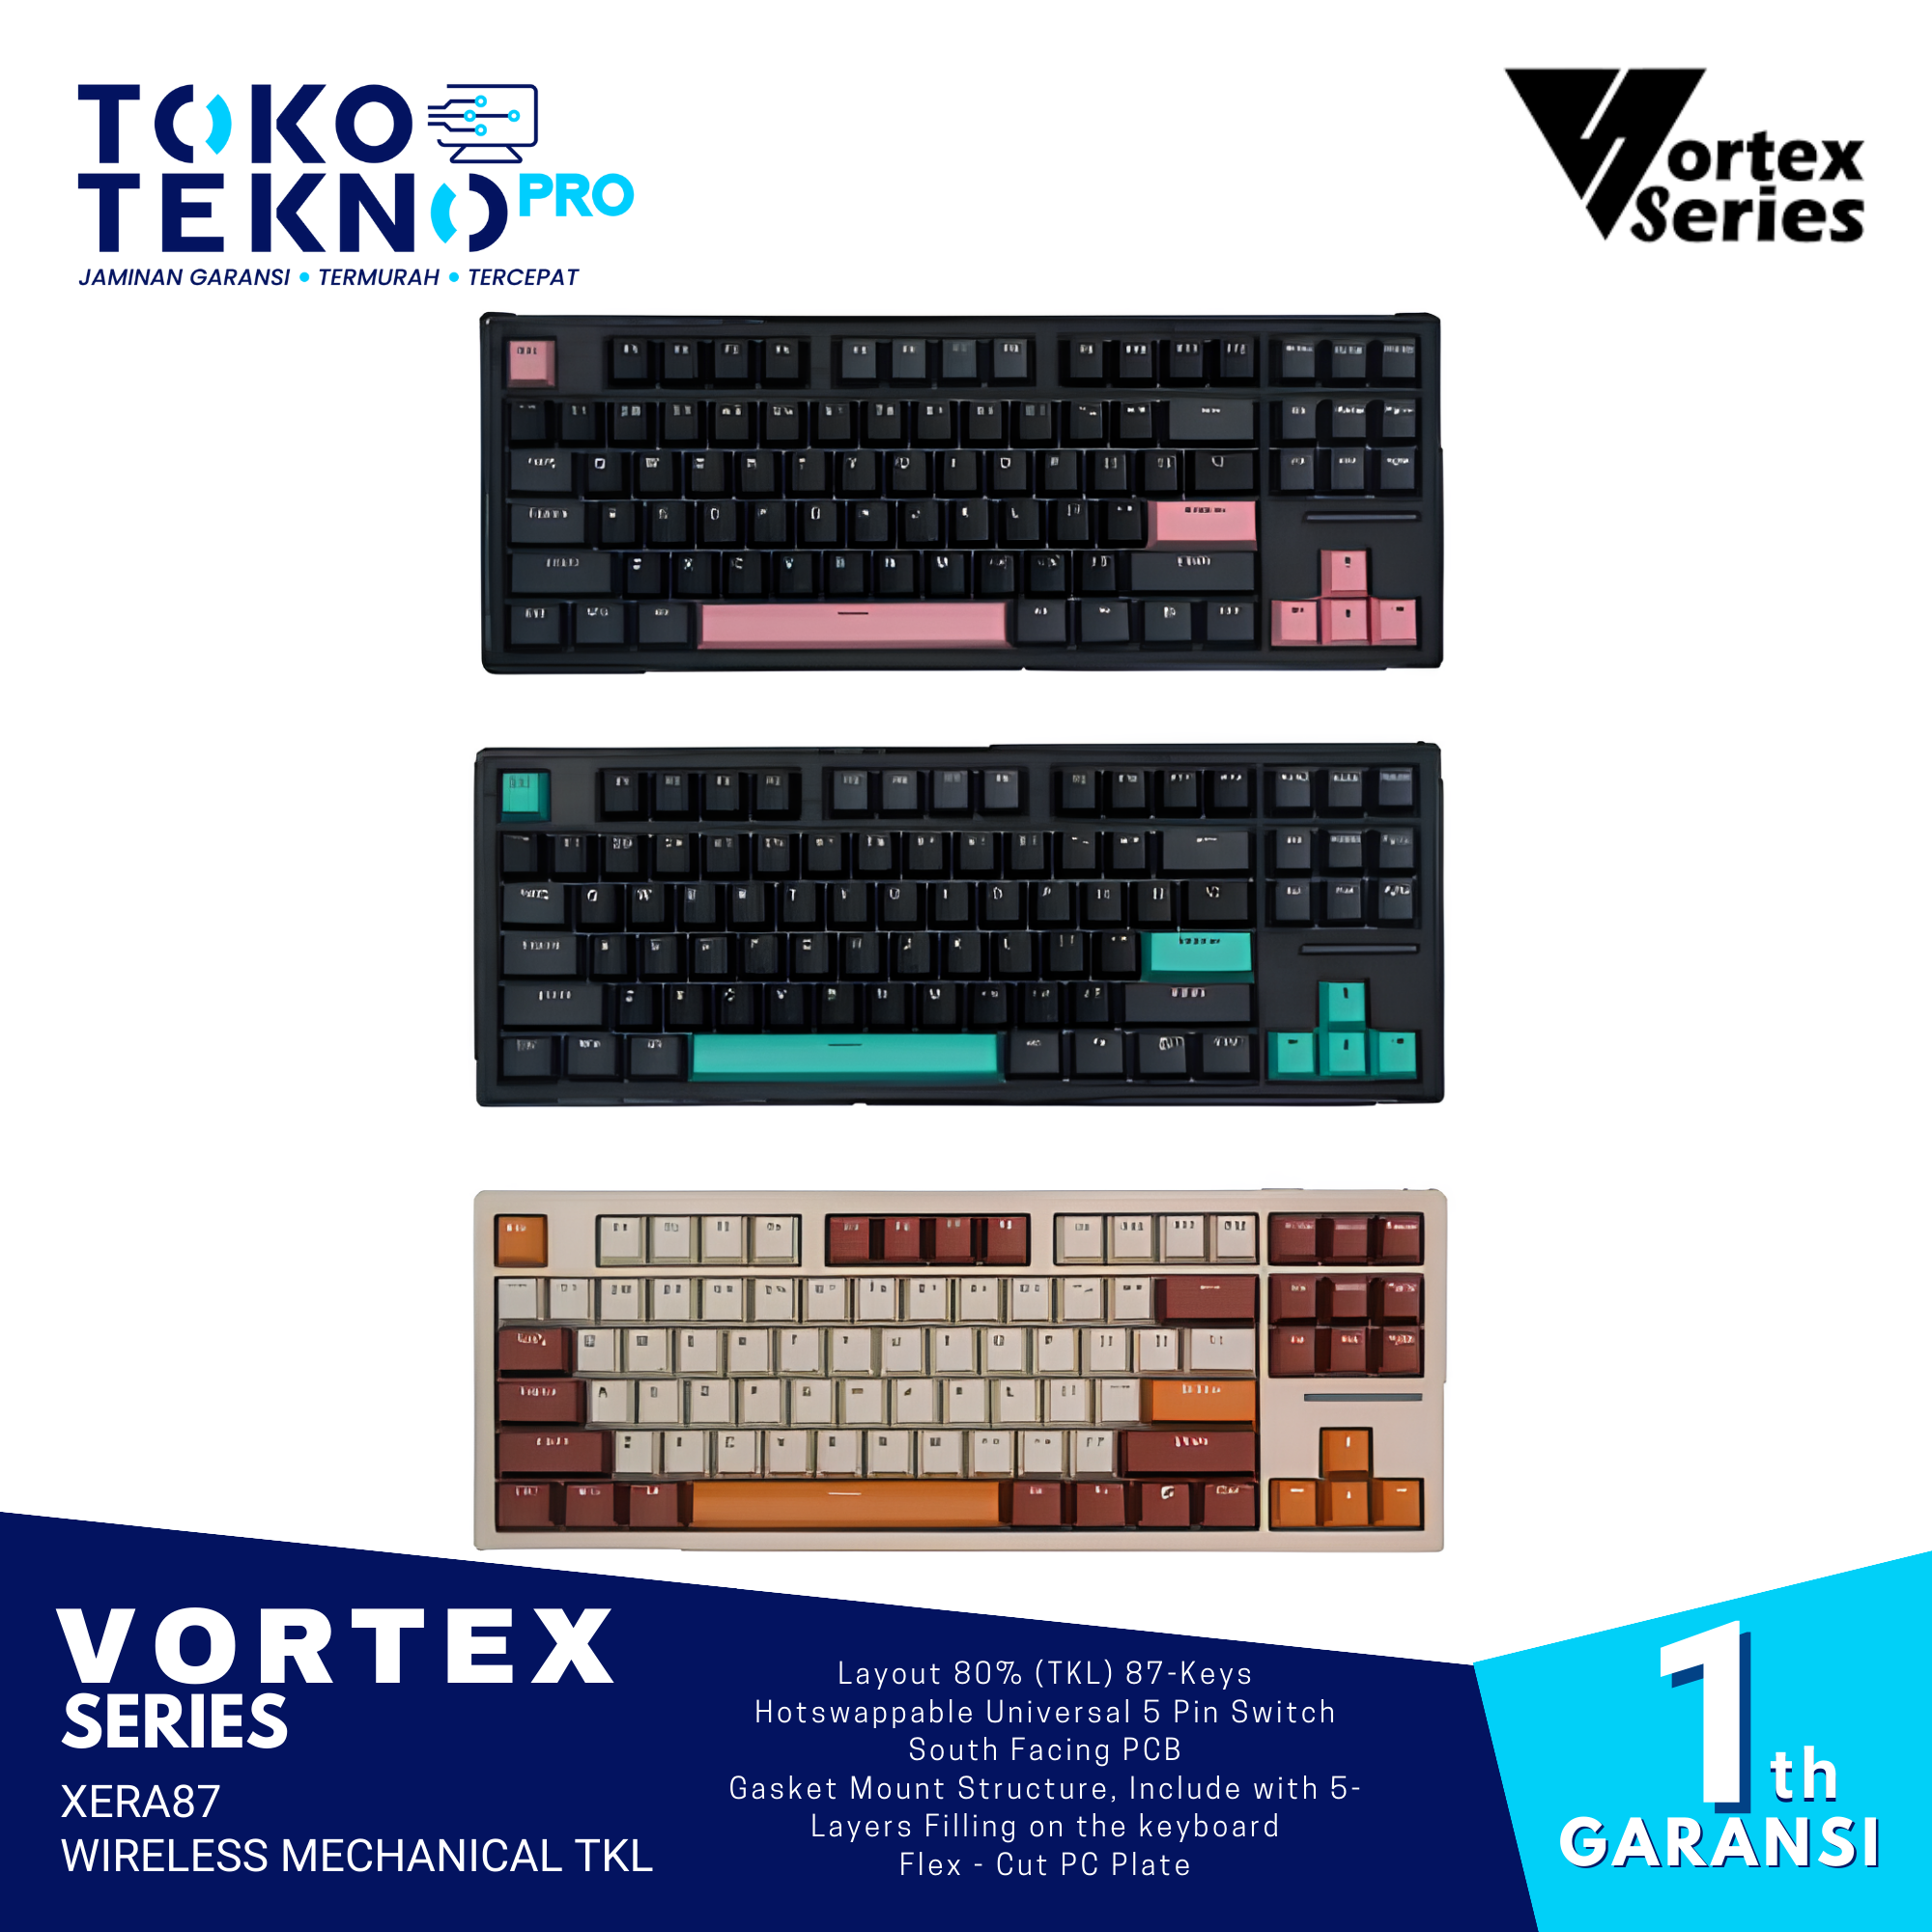 VortexSeries Xera87 Wired Mechanical TKL Gaming Keyboard